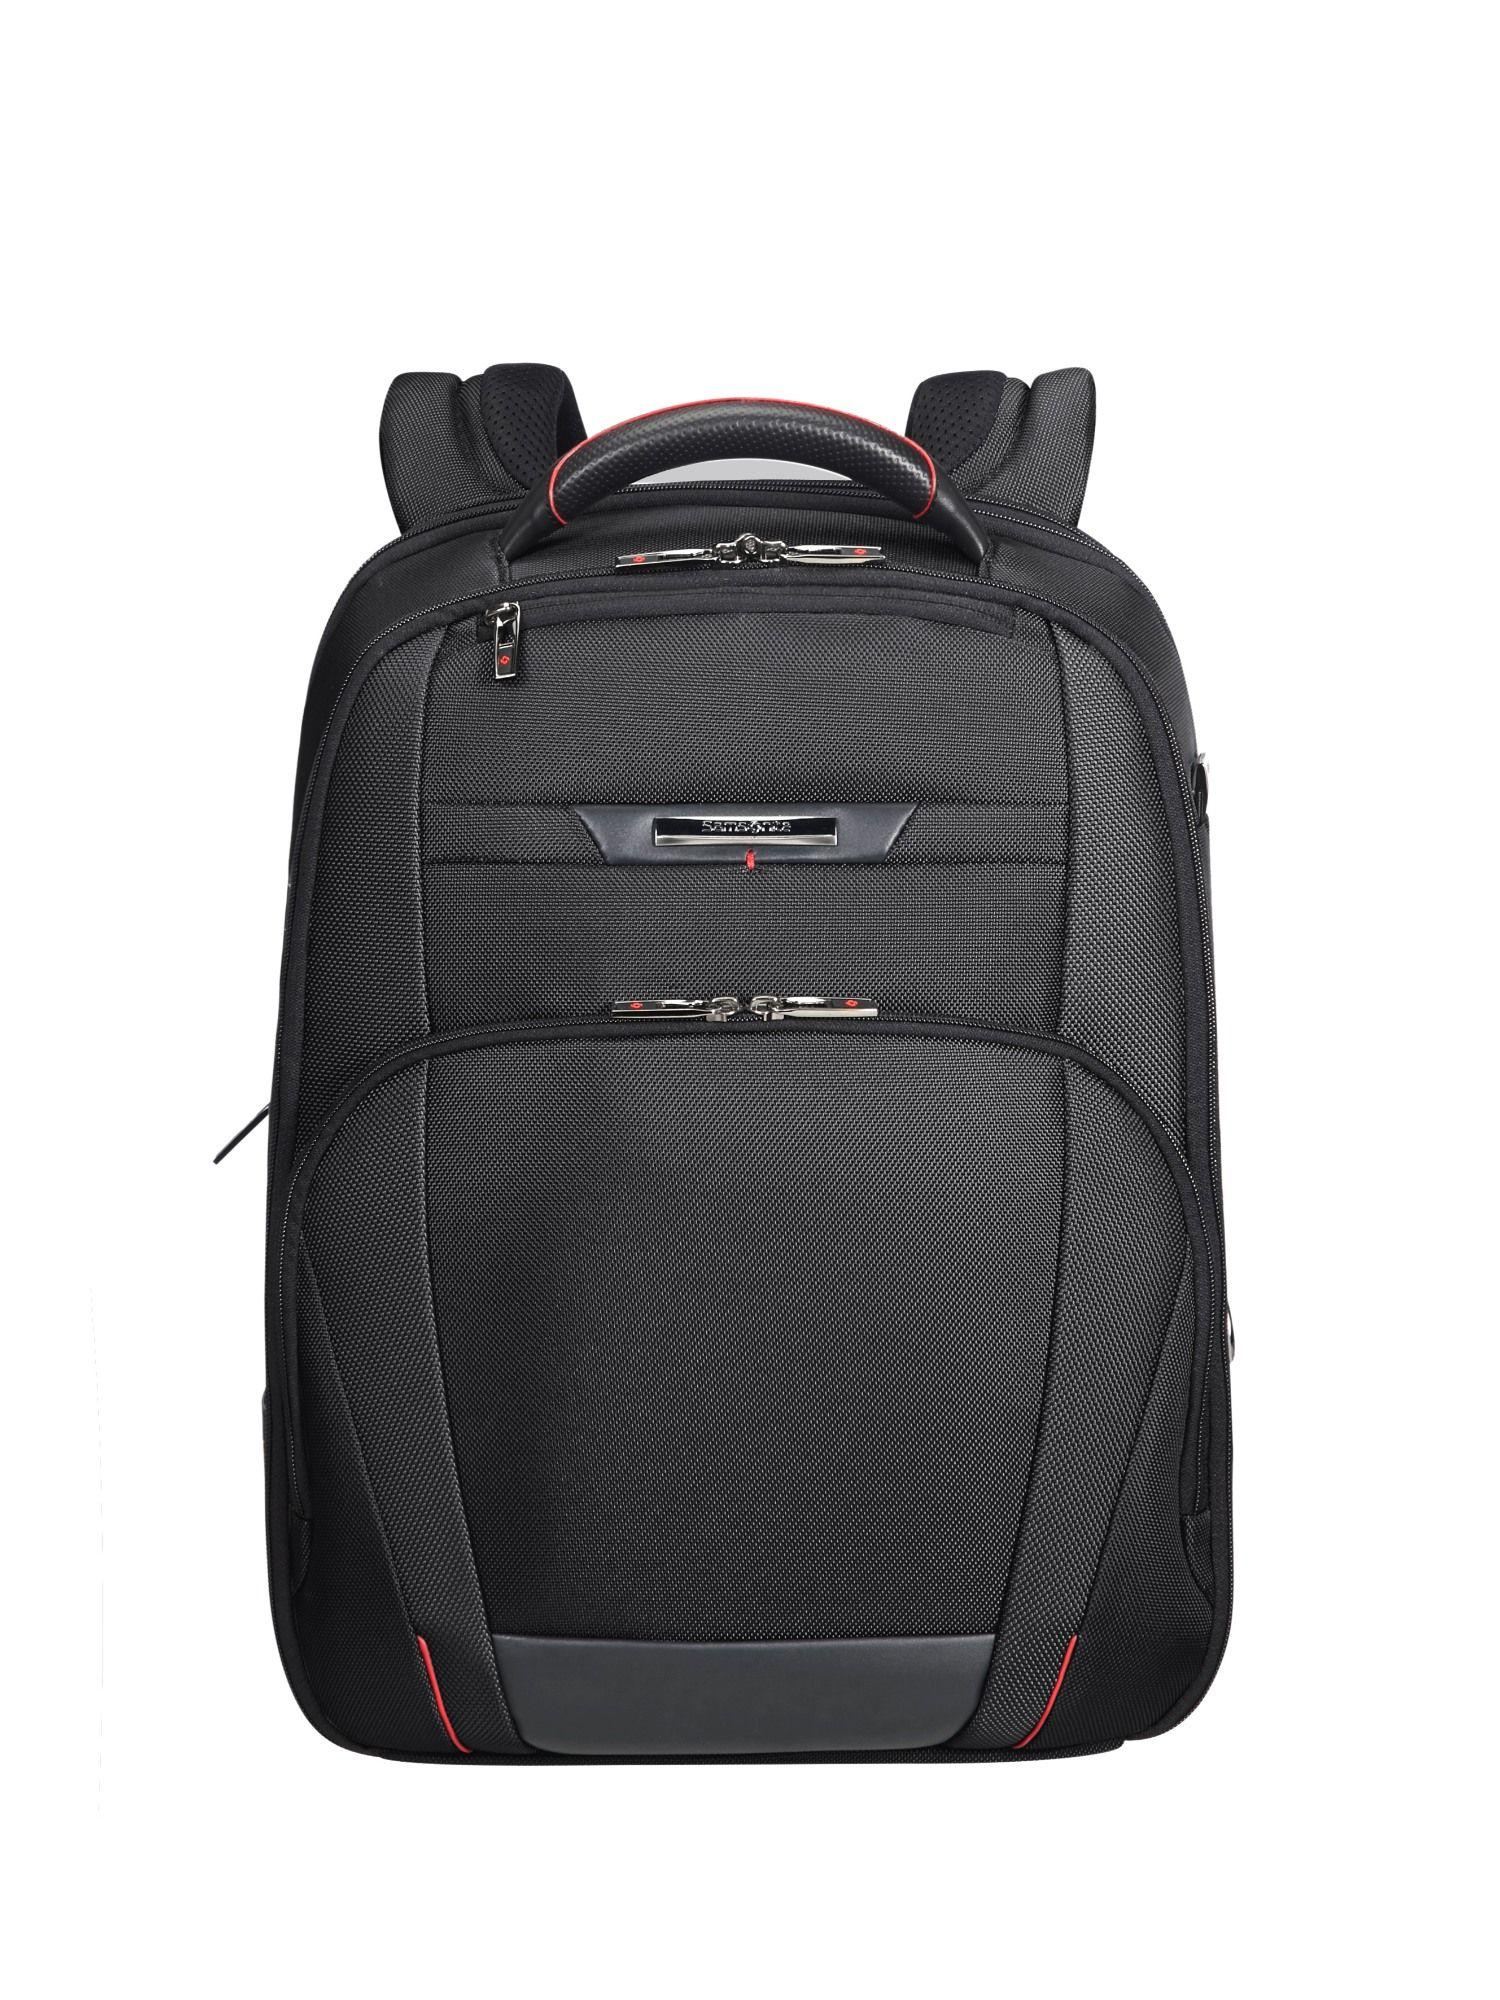 pro-dlx 5 laptop backpack exp-in-black